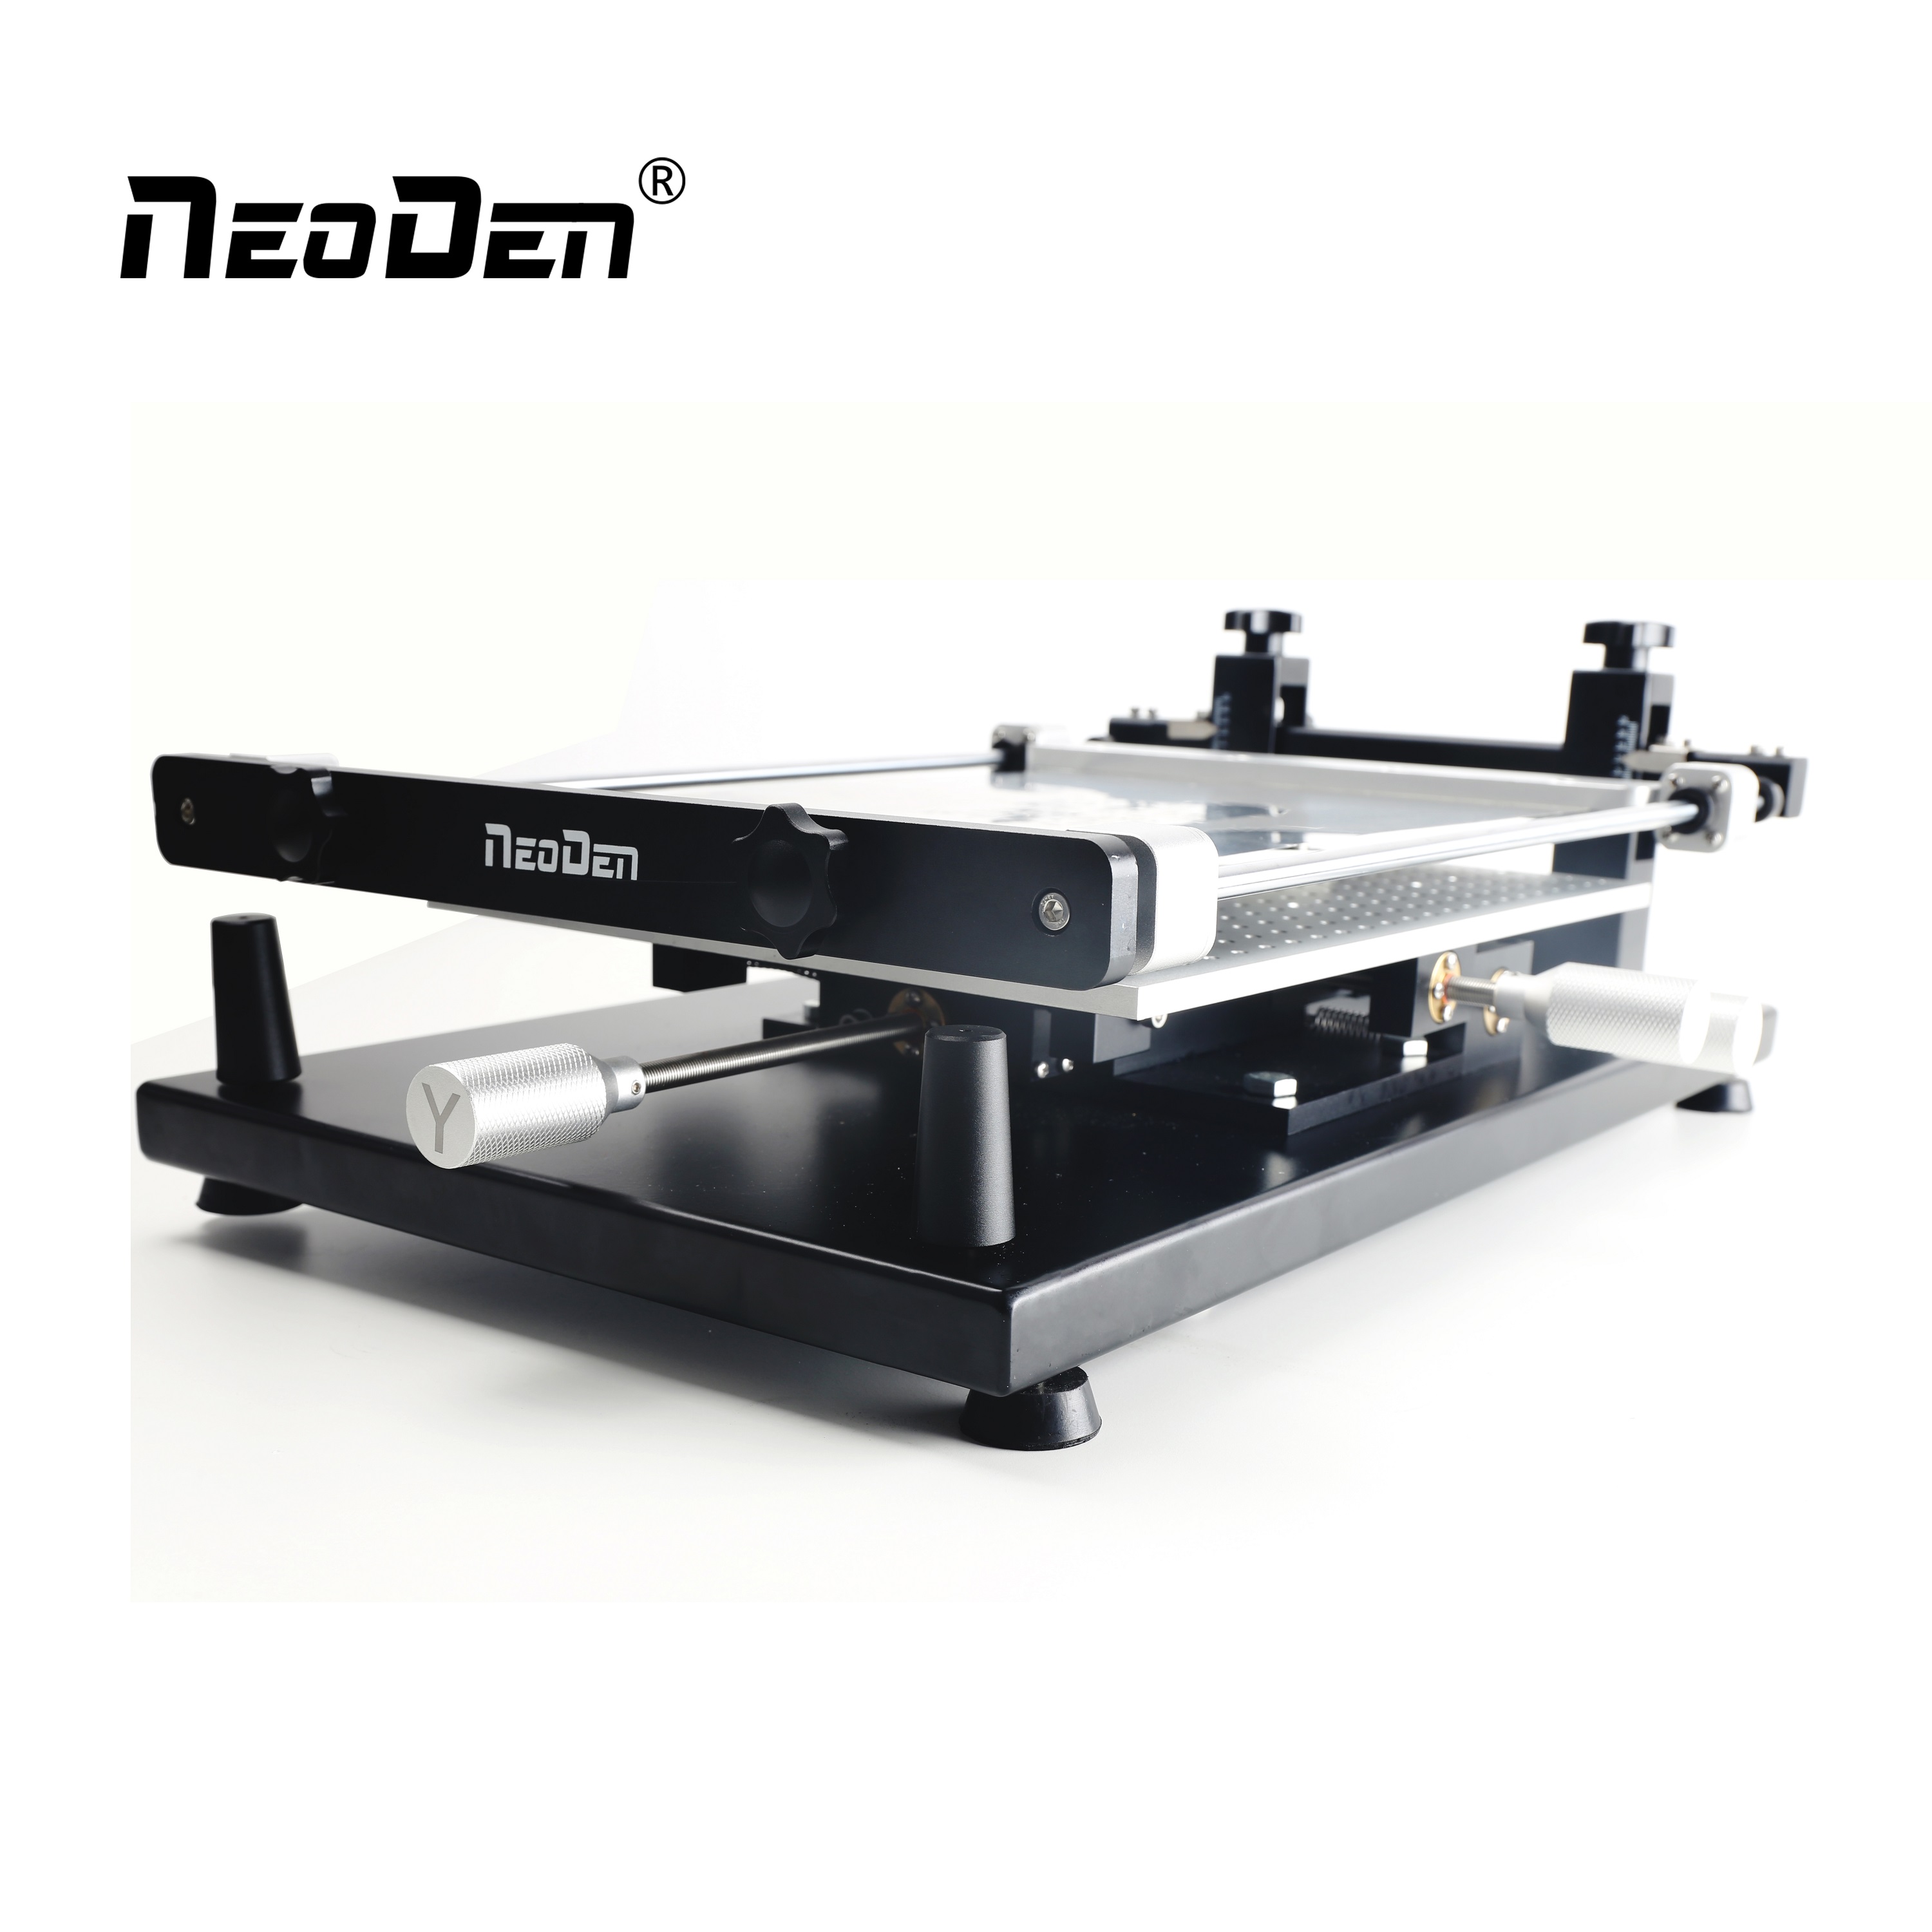 New Fashion Design for Pcb Machine Printer - NeoDen manual SMT solder paste printer|SMT stencil printer – Neoden